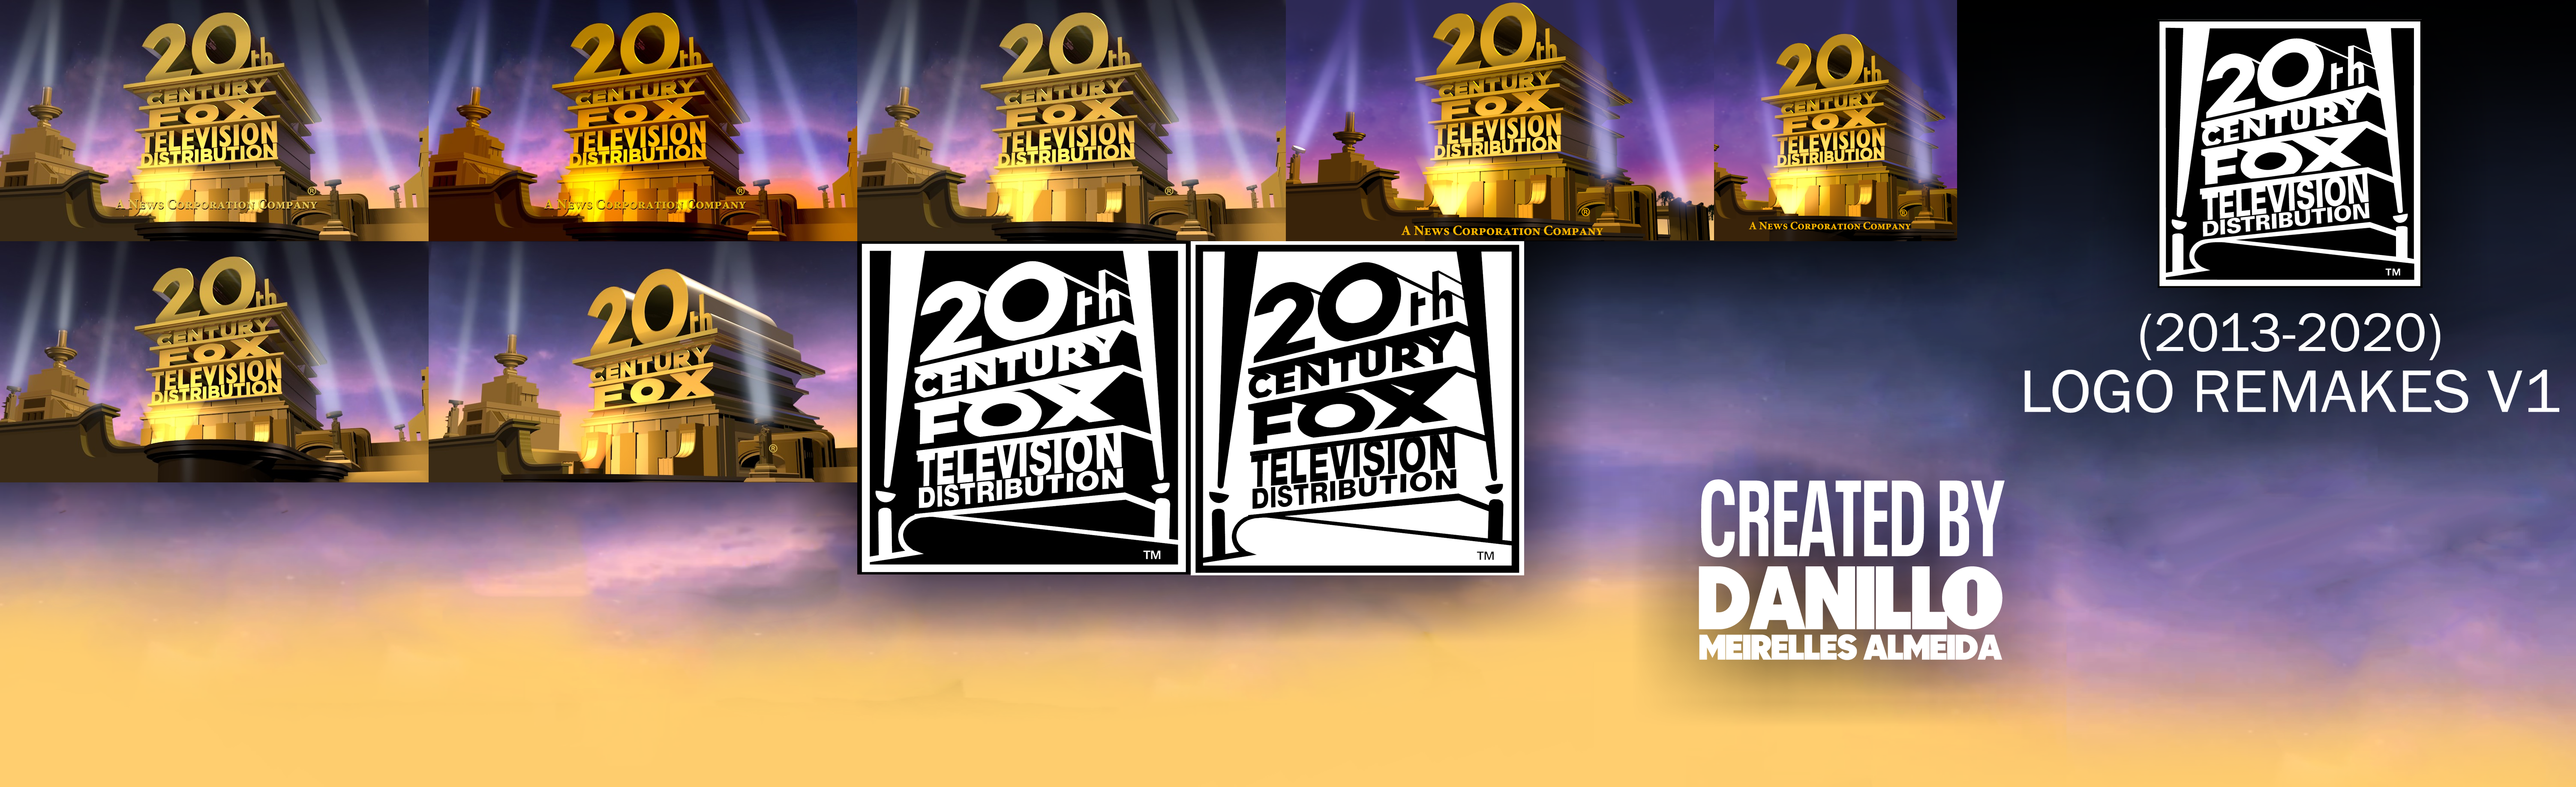 20th Century Fox Home Entertainment Logo (1994-2010) (FSP Style